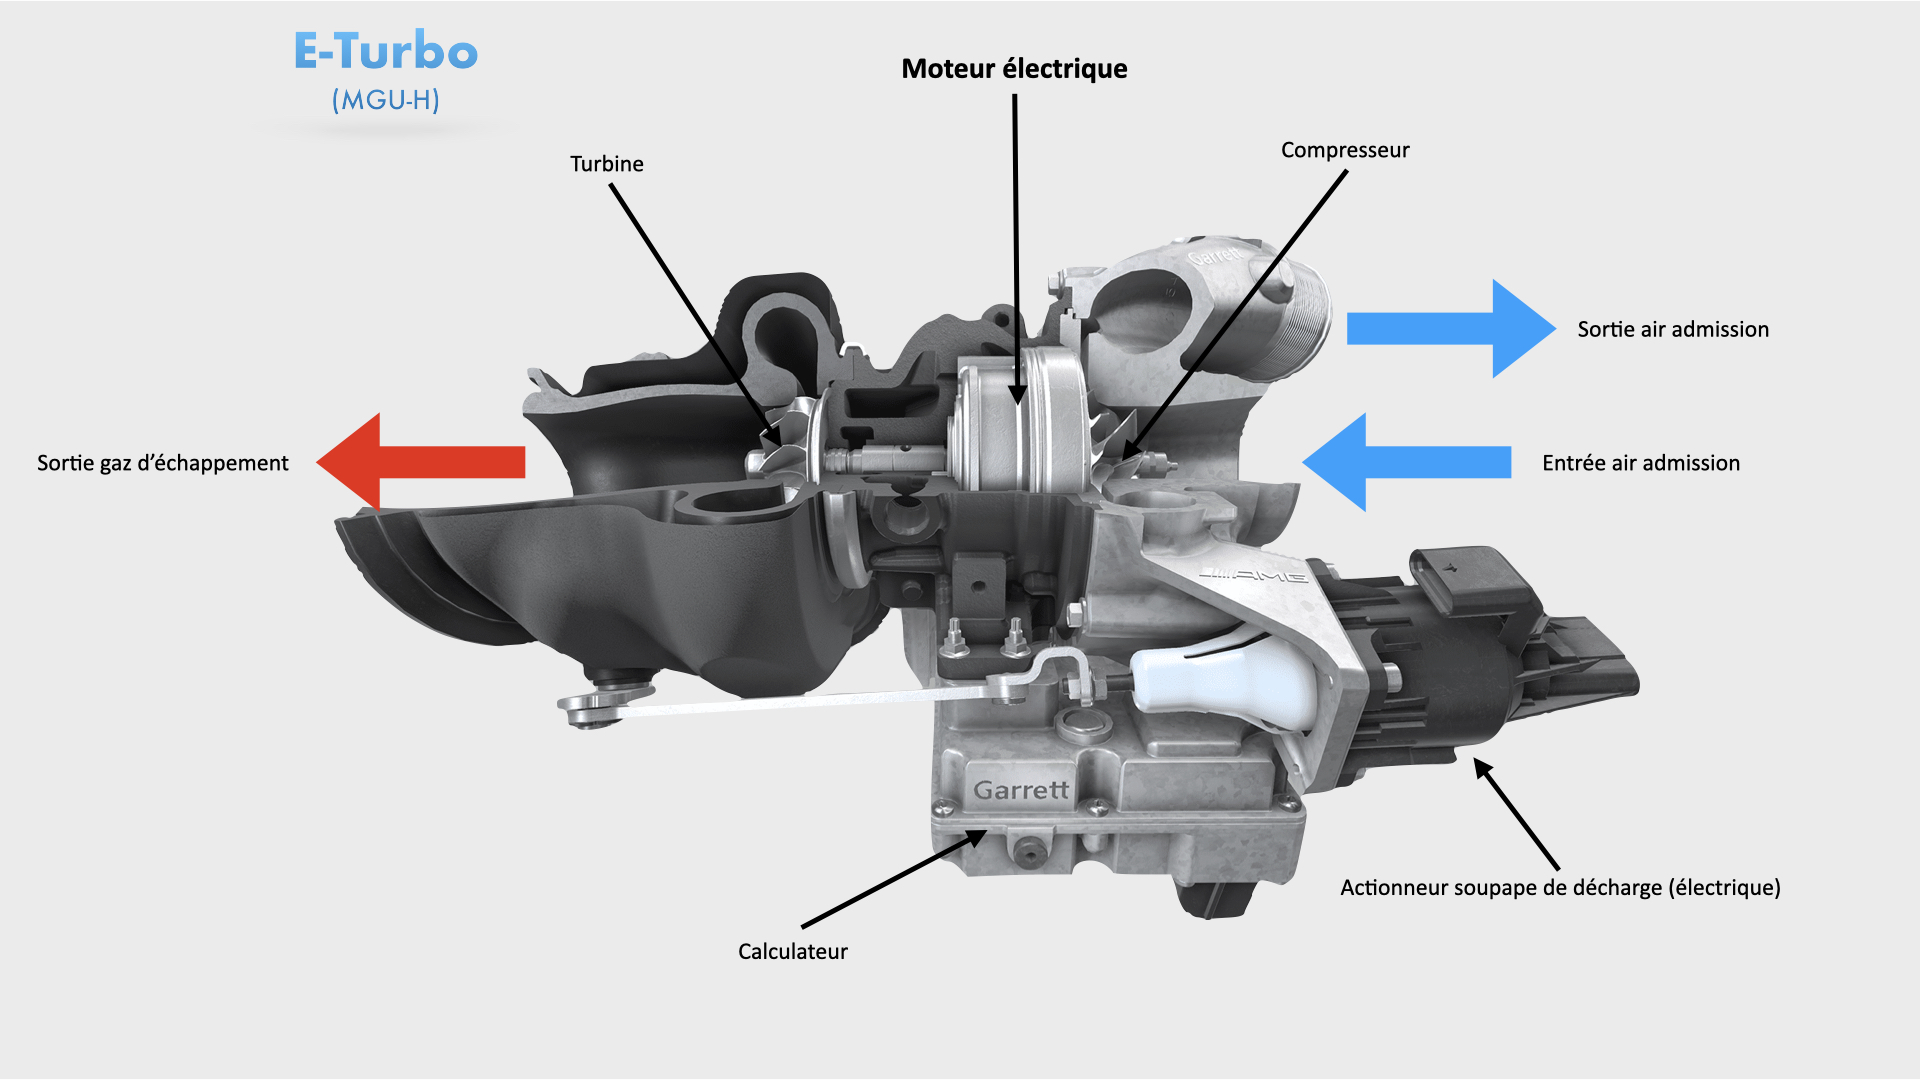 Fonctionnement du E-turbo / MGU-H